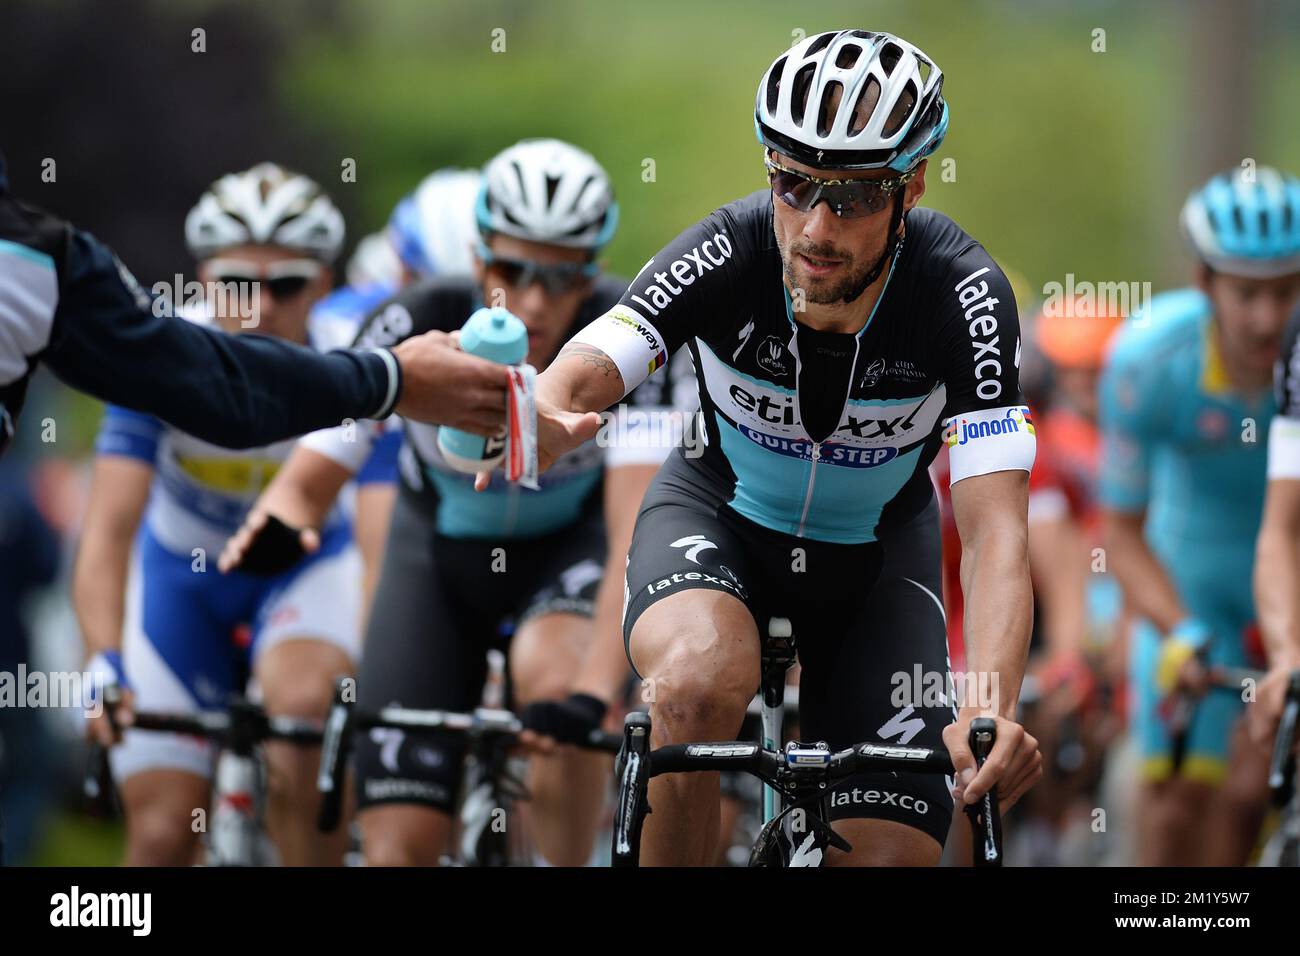 20150531 - SANKT VITH, BELGIUM: Belgian Tom Boonen of team Ettix ...